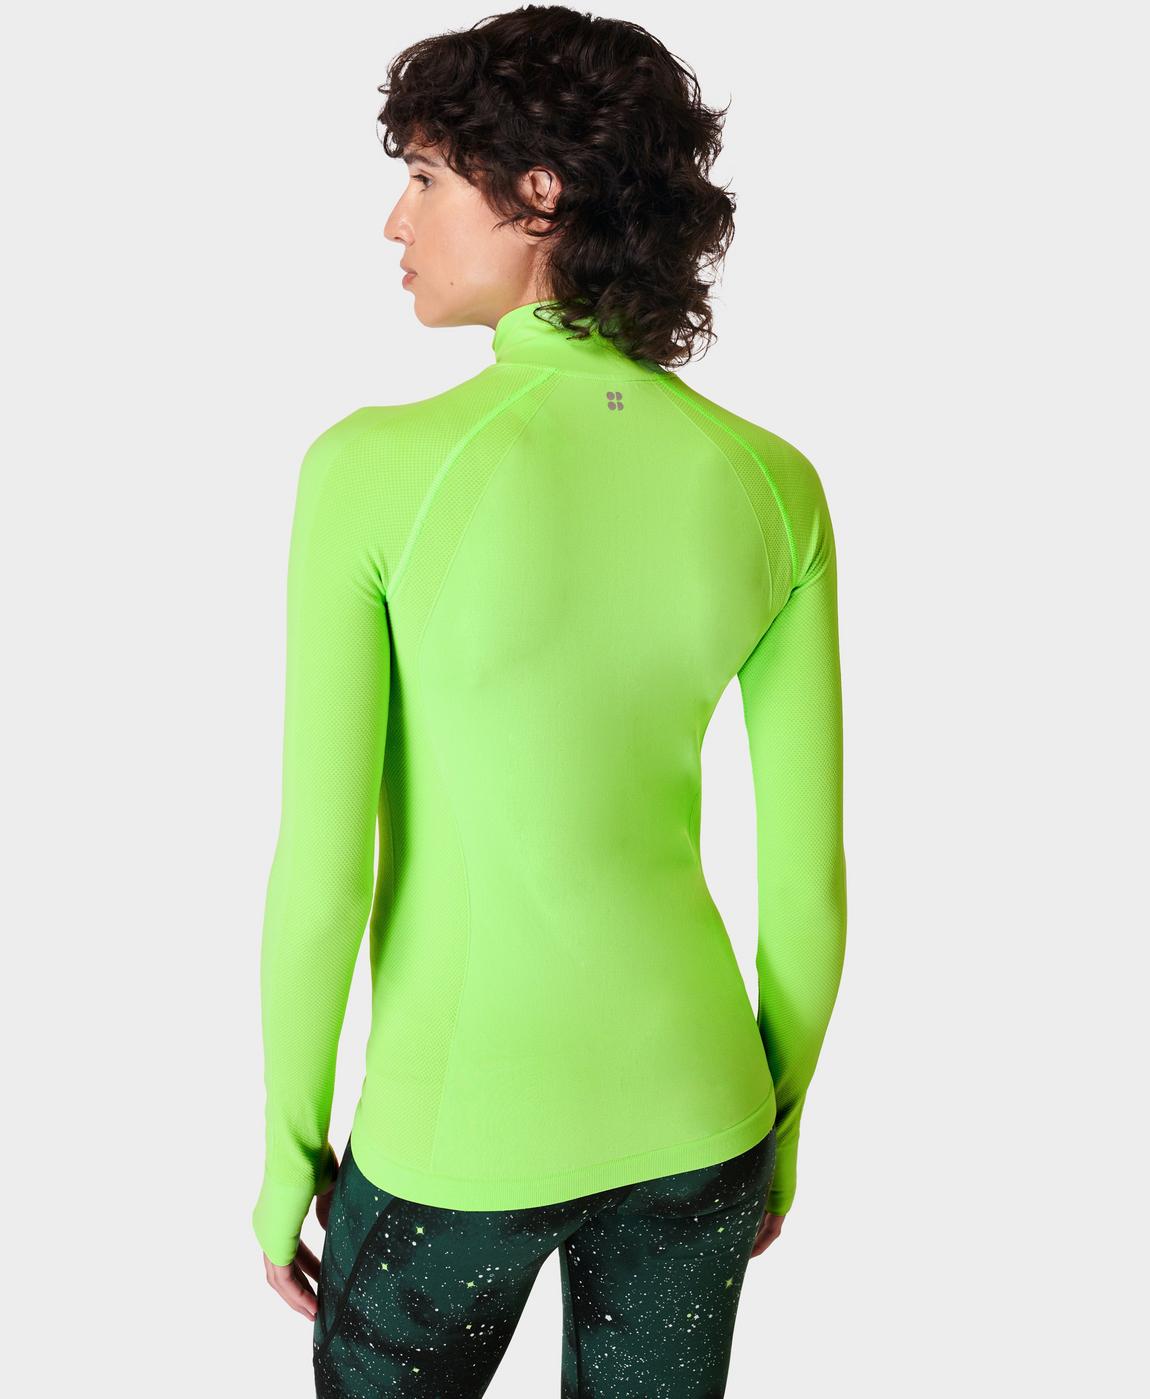 Athlete Seamless Half Zip Long Sleeve Top- flurogreen | Women's